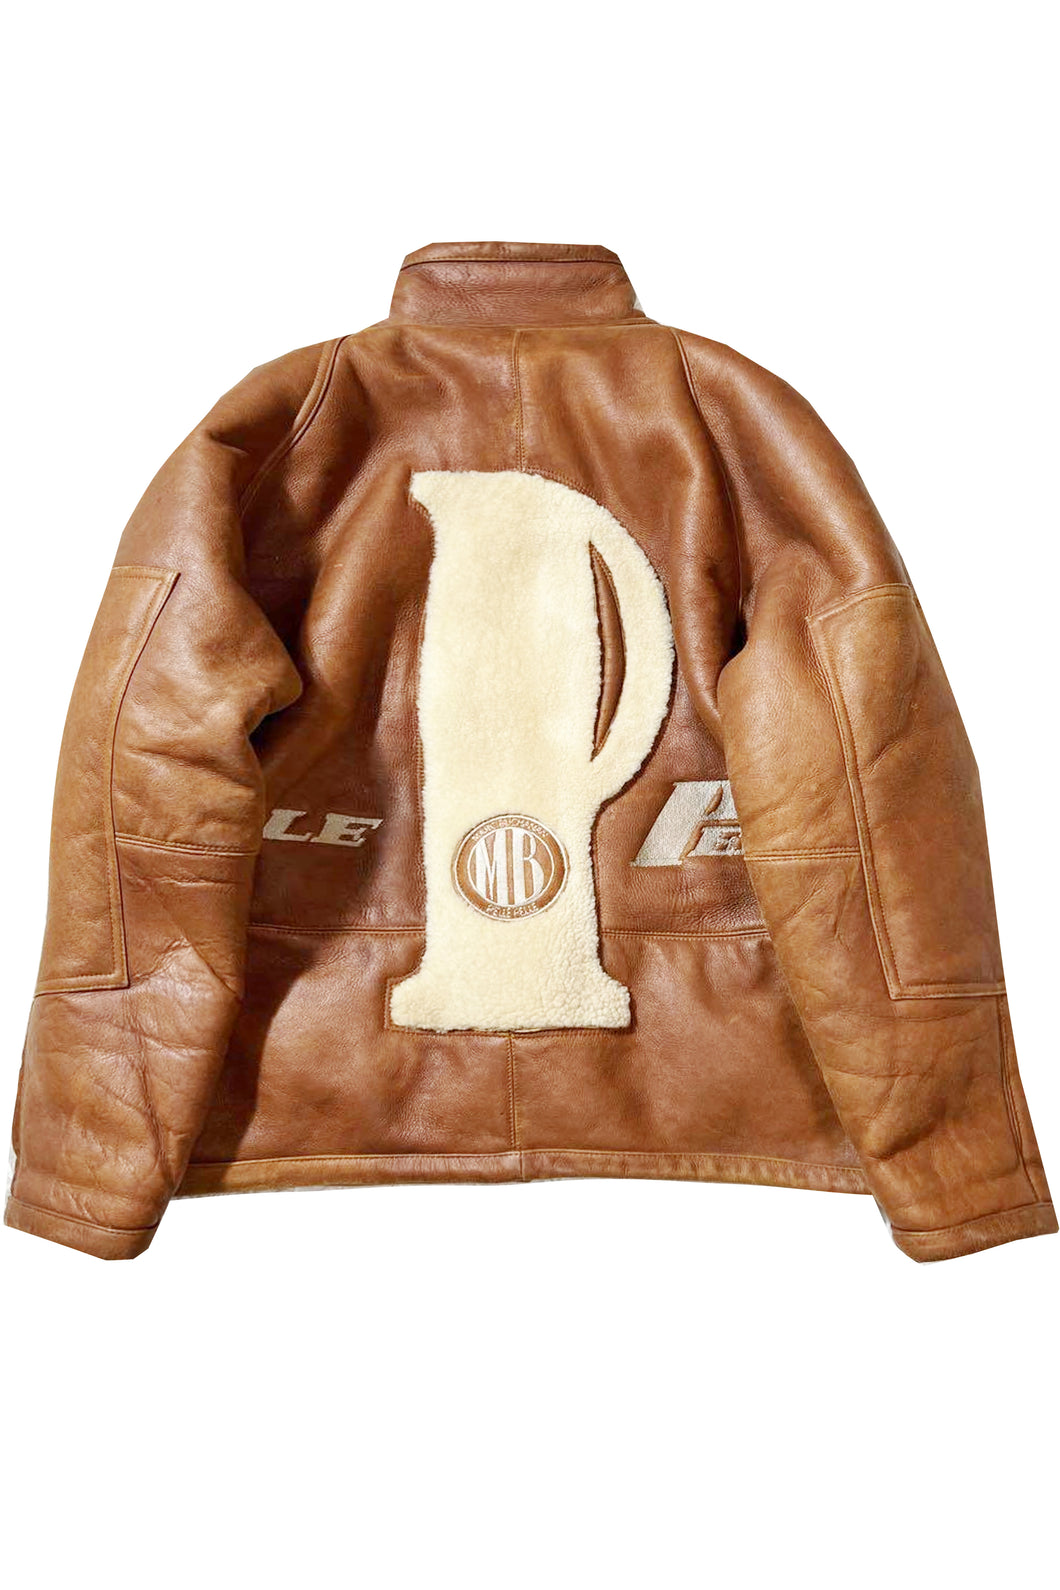 Pelle Pelle Brown Leather Shearling Jacket